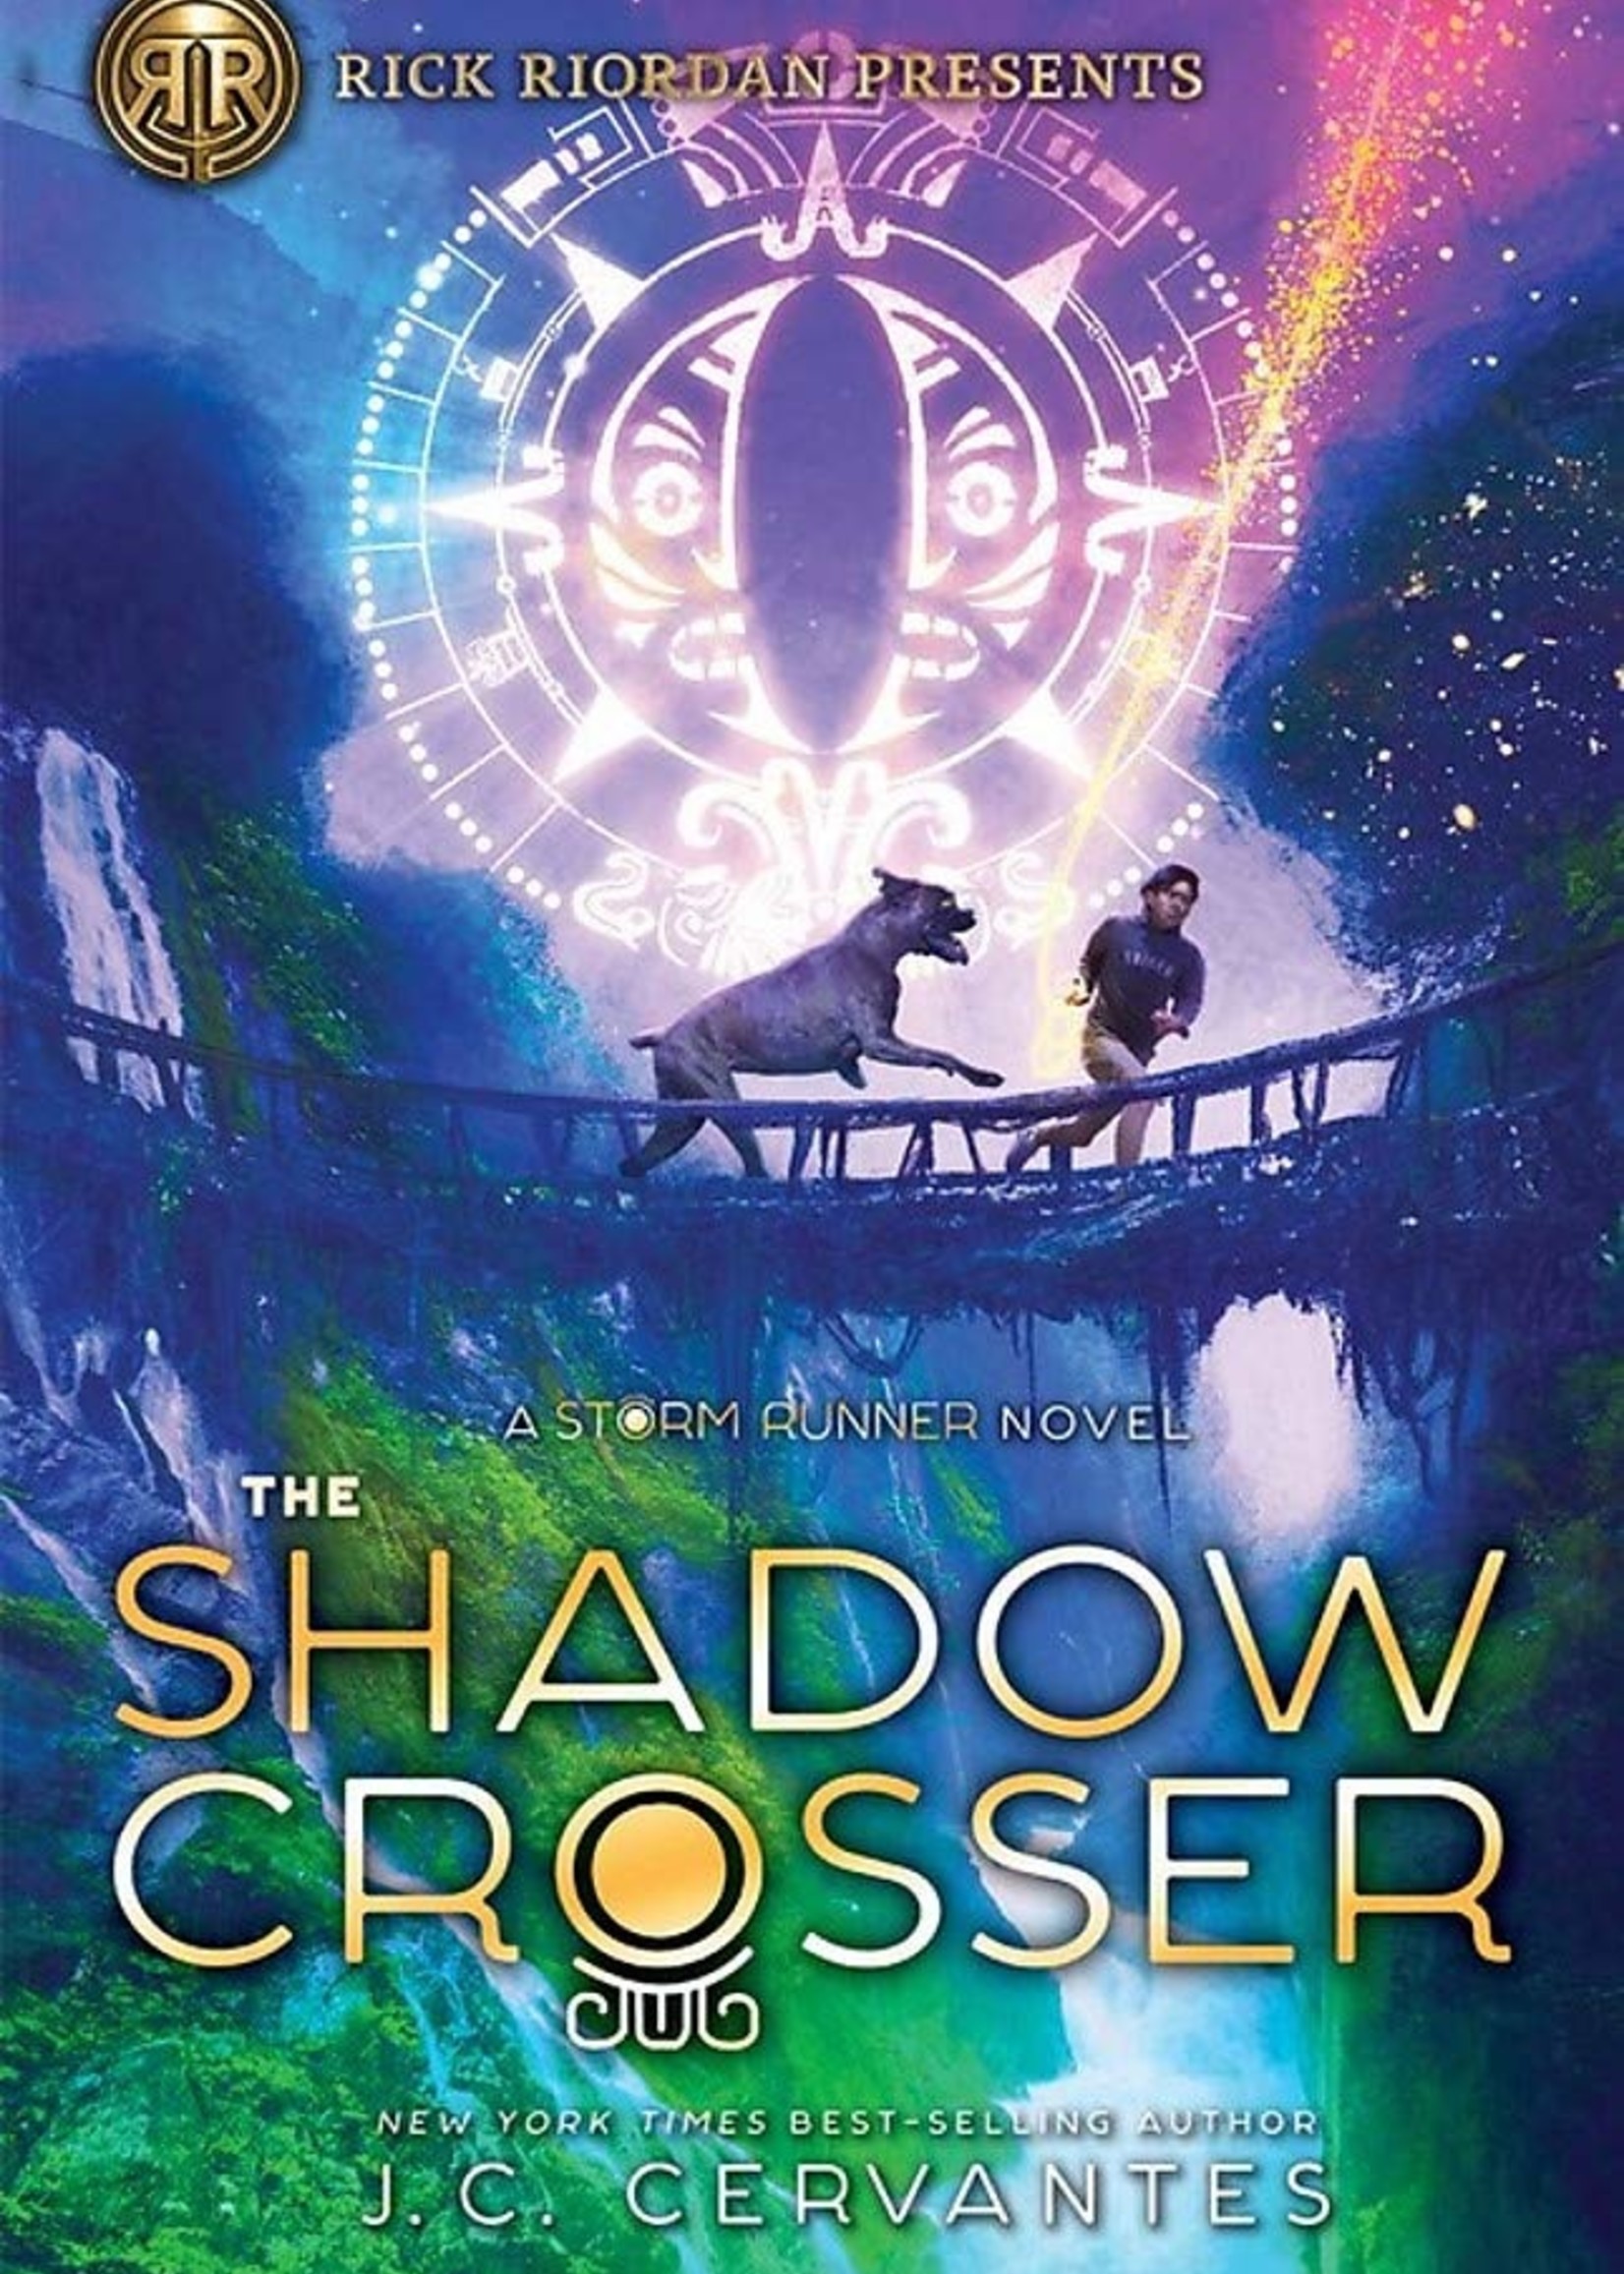 Rick Riordan Presents: Storm Runner #03, The Shadow Crosser - Hardcover